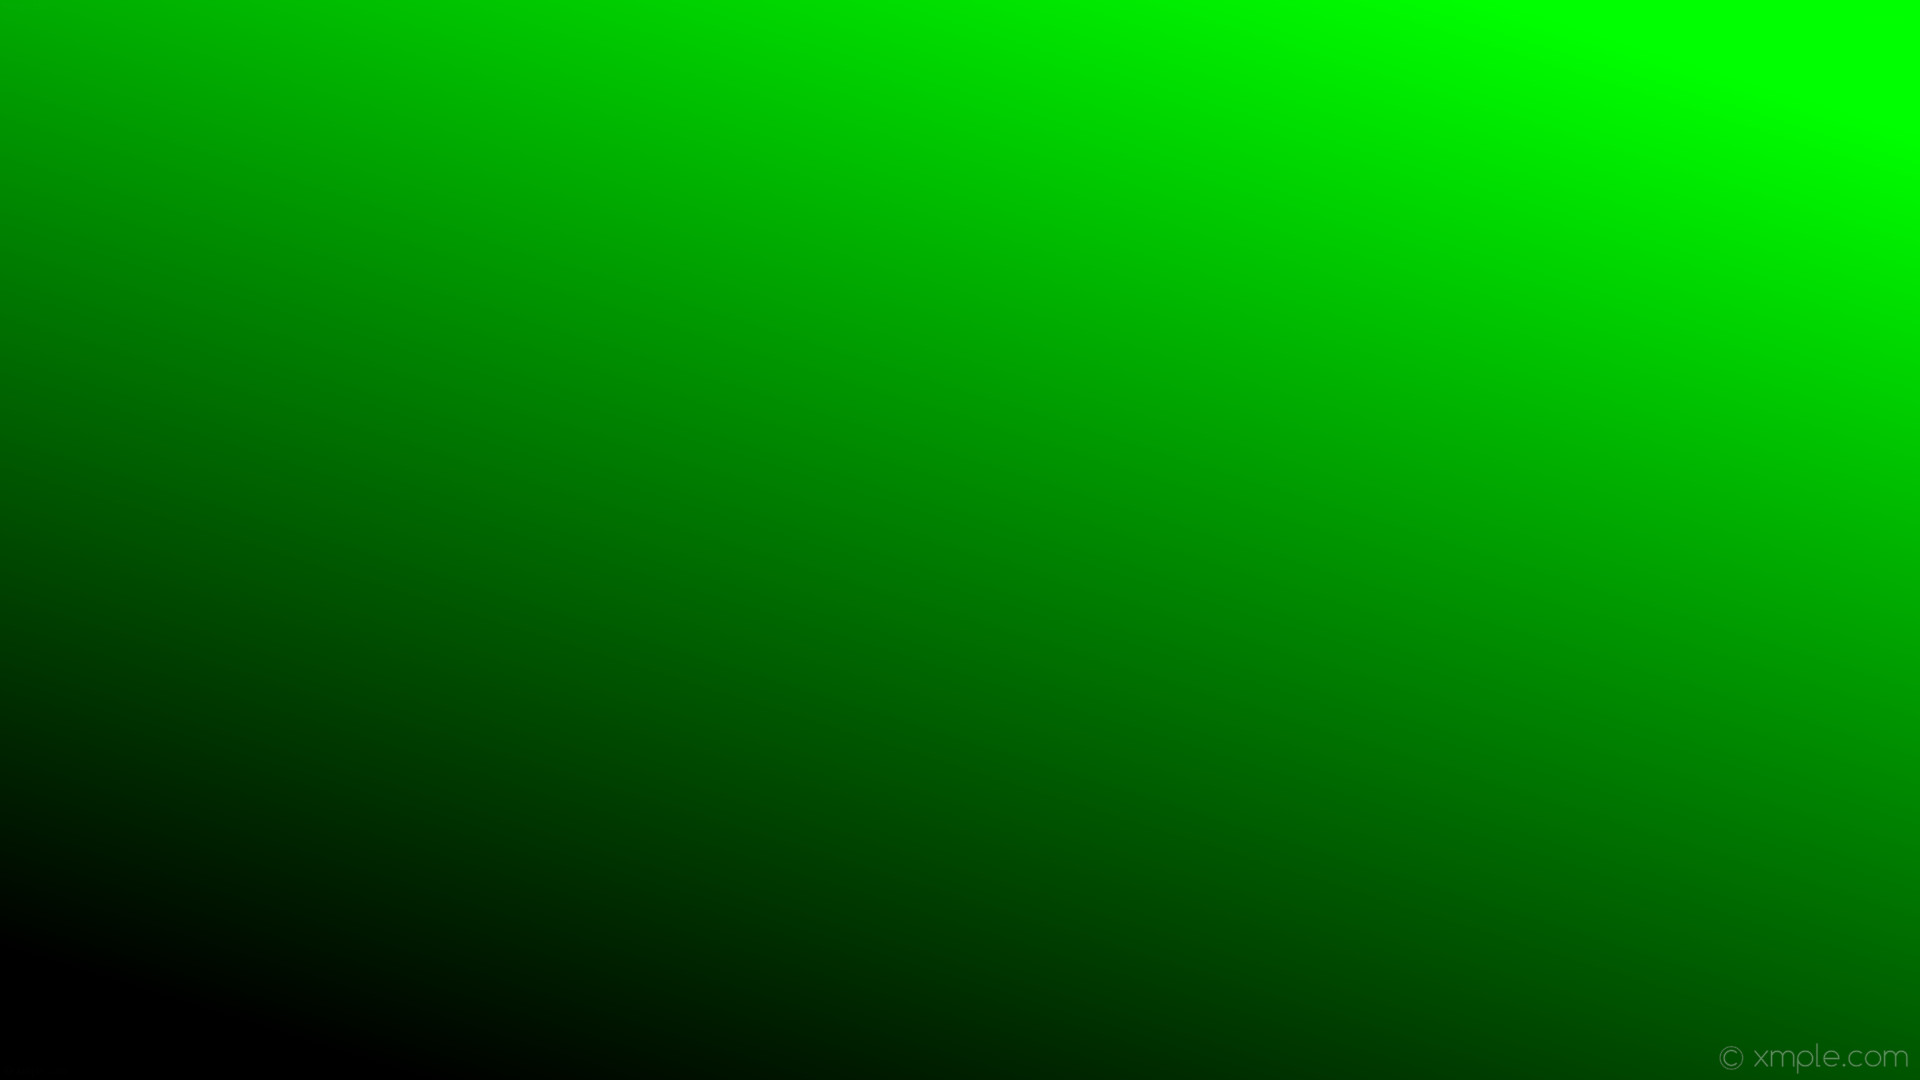 1920x1080 wallpaper black green gradient linear lime #000000 #00ff00 225Â°